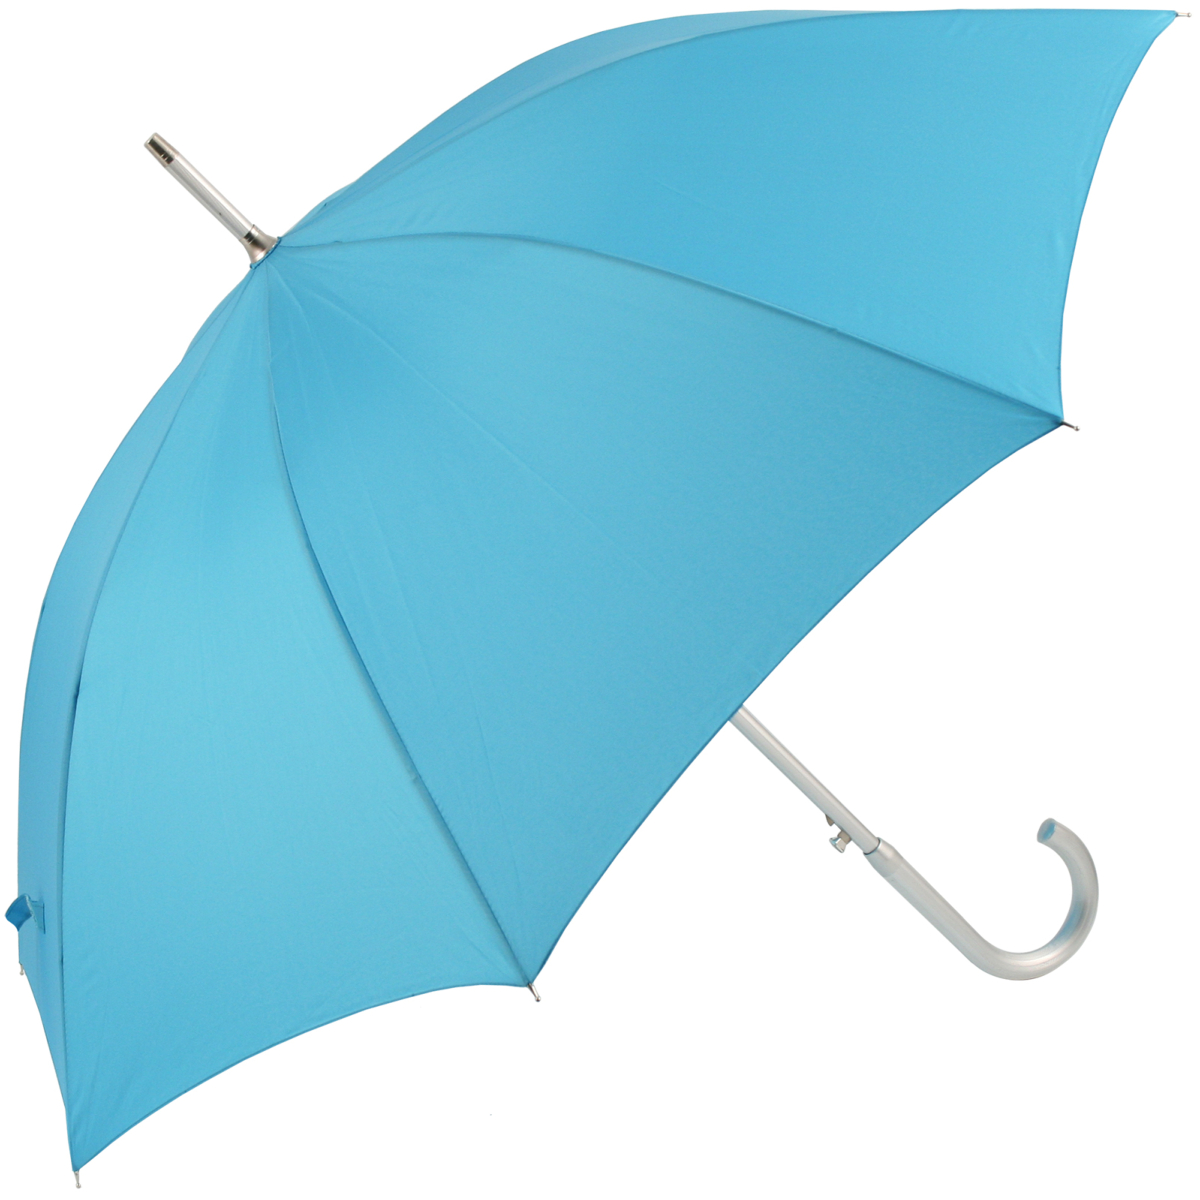 Colours - Plain Coloured Umbrella - Aqua